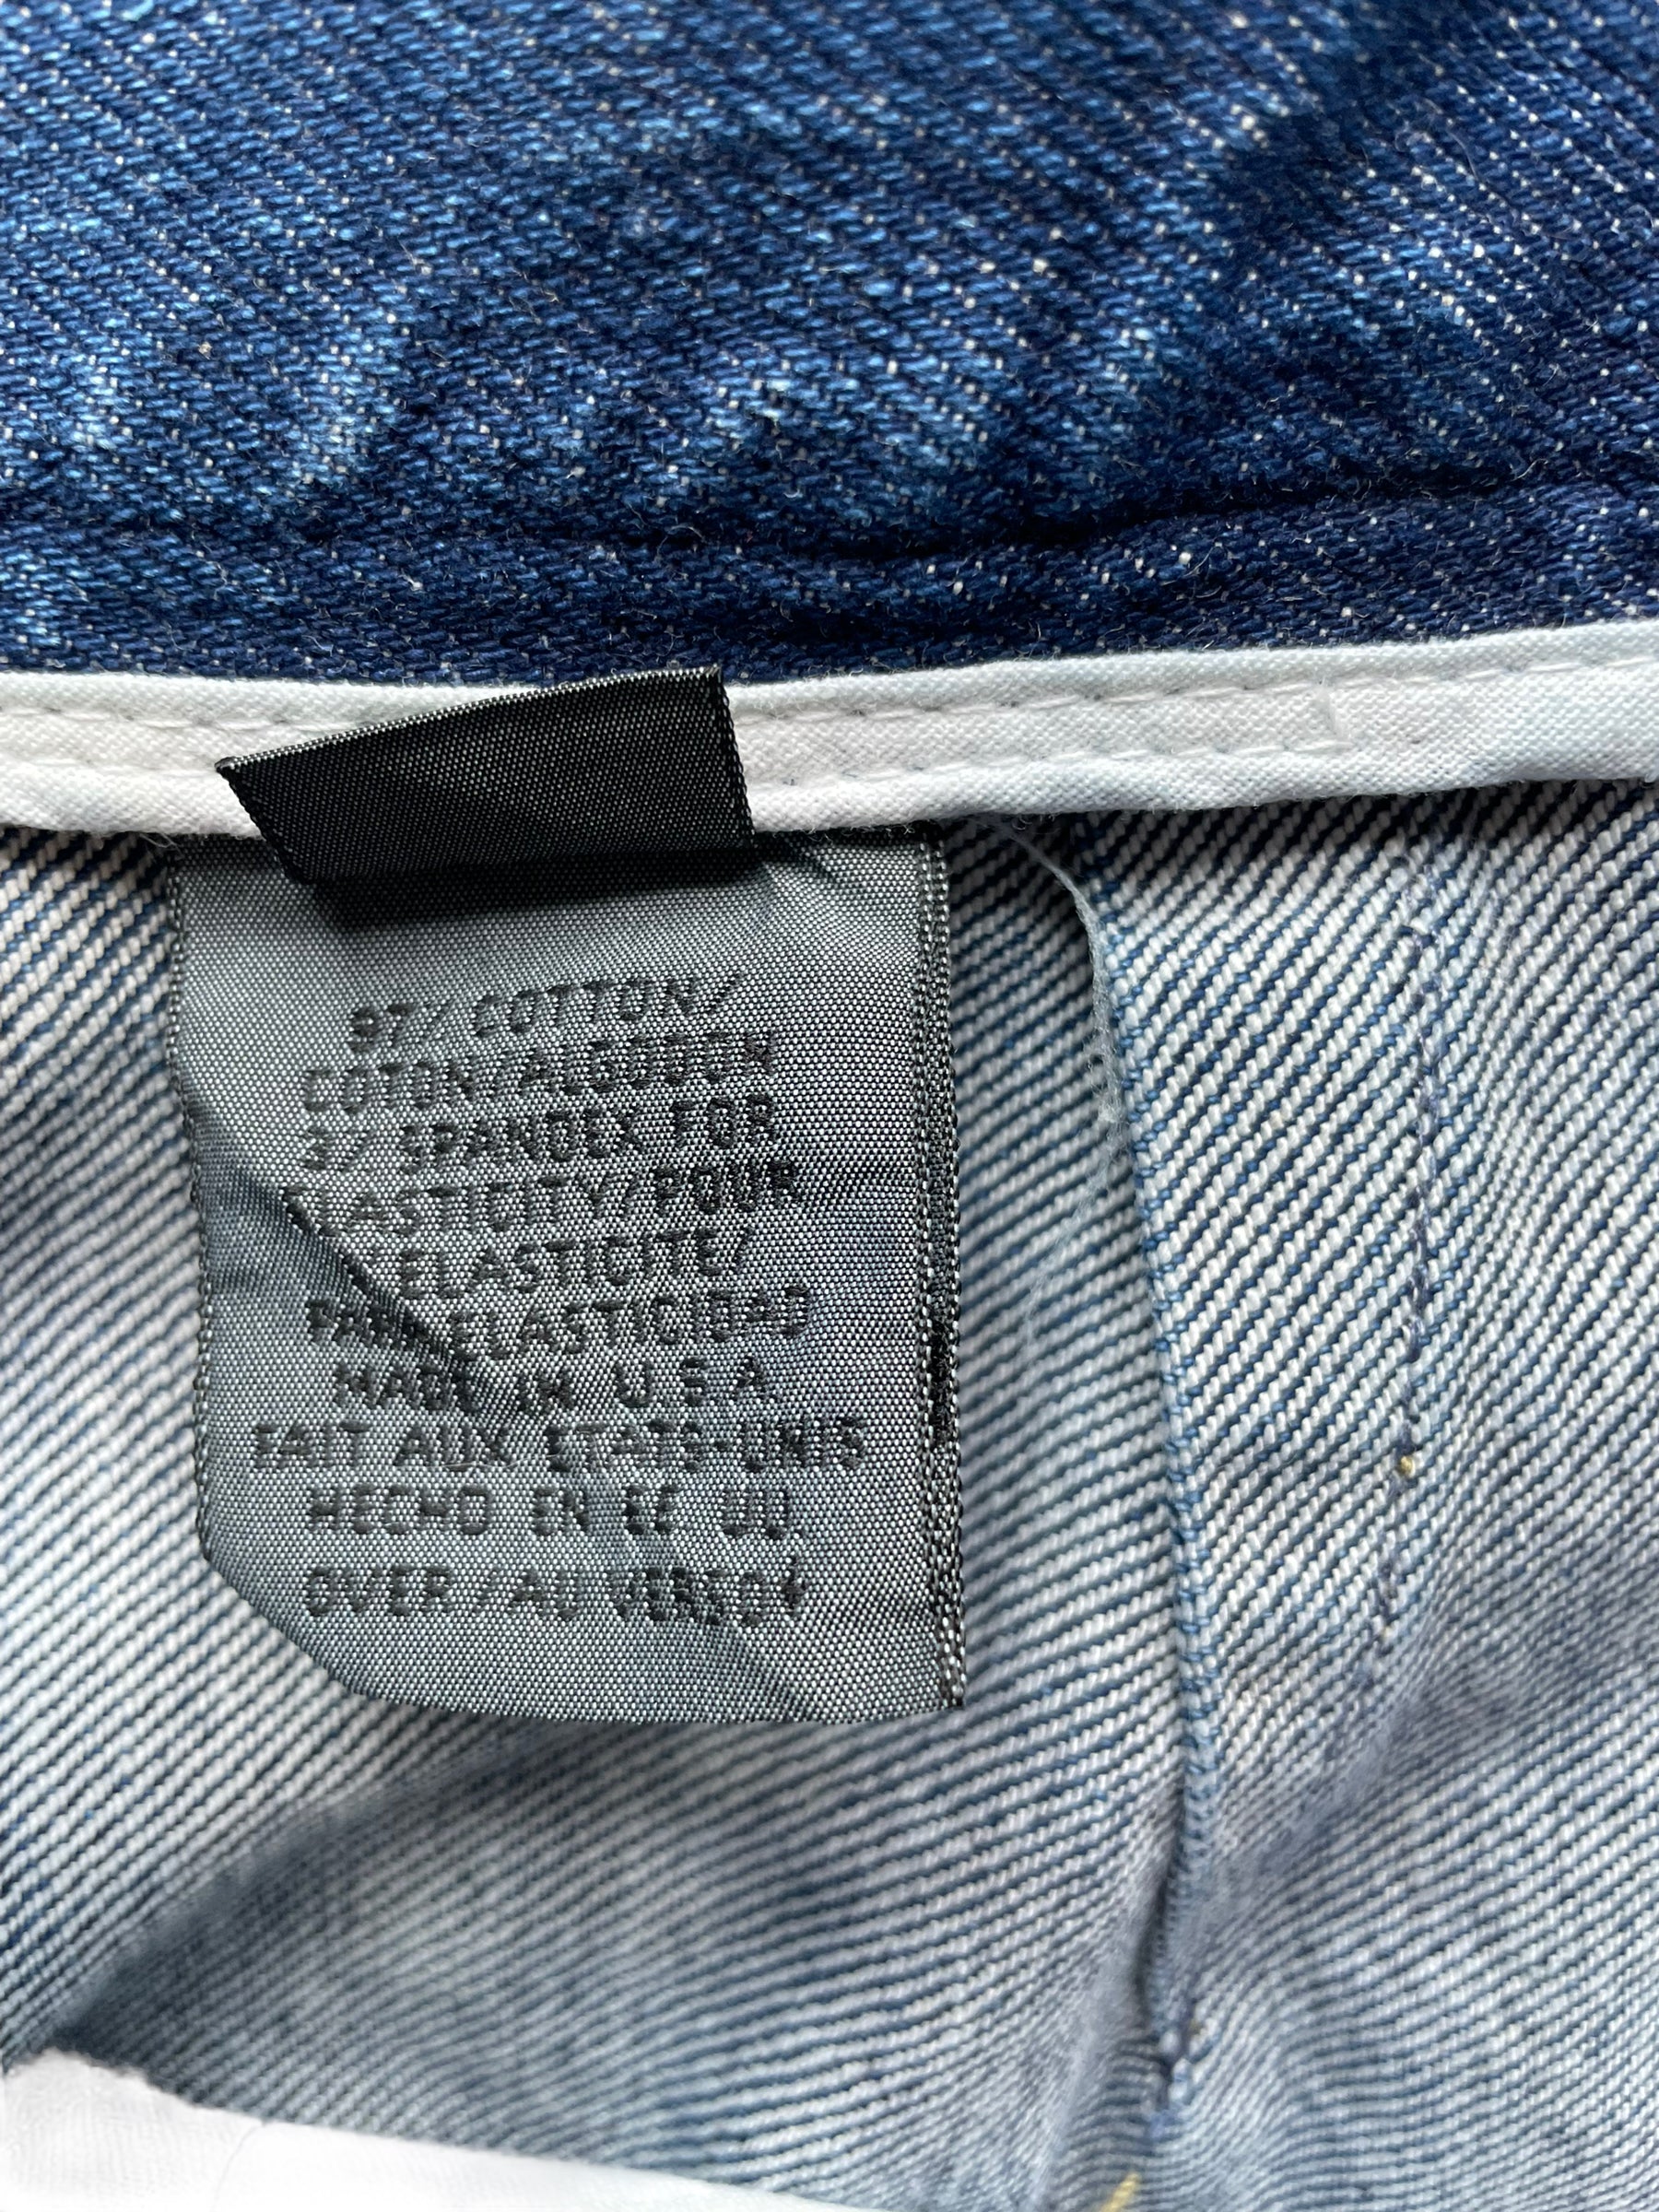 Care tag view of Vintage Deadstock 80's Liz Claiborne Side Zip Stir Up Jeans